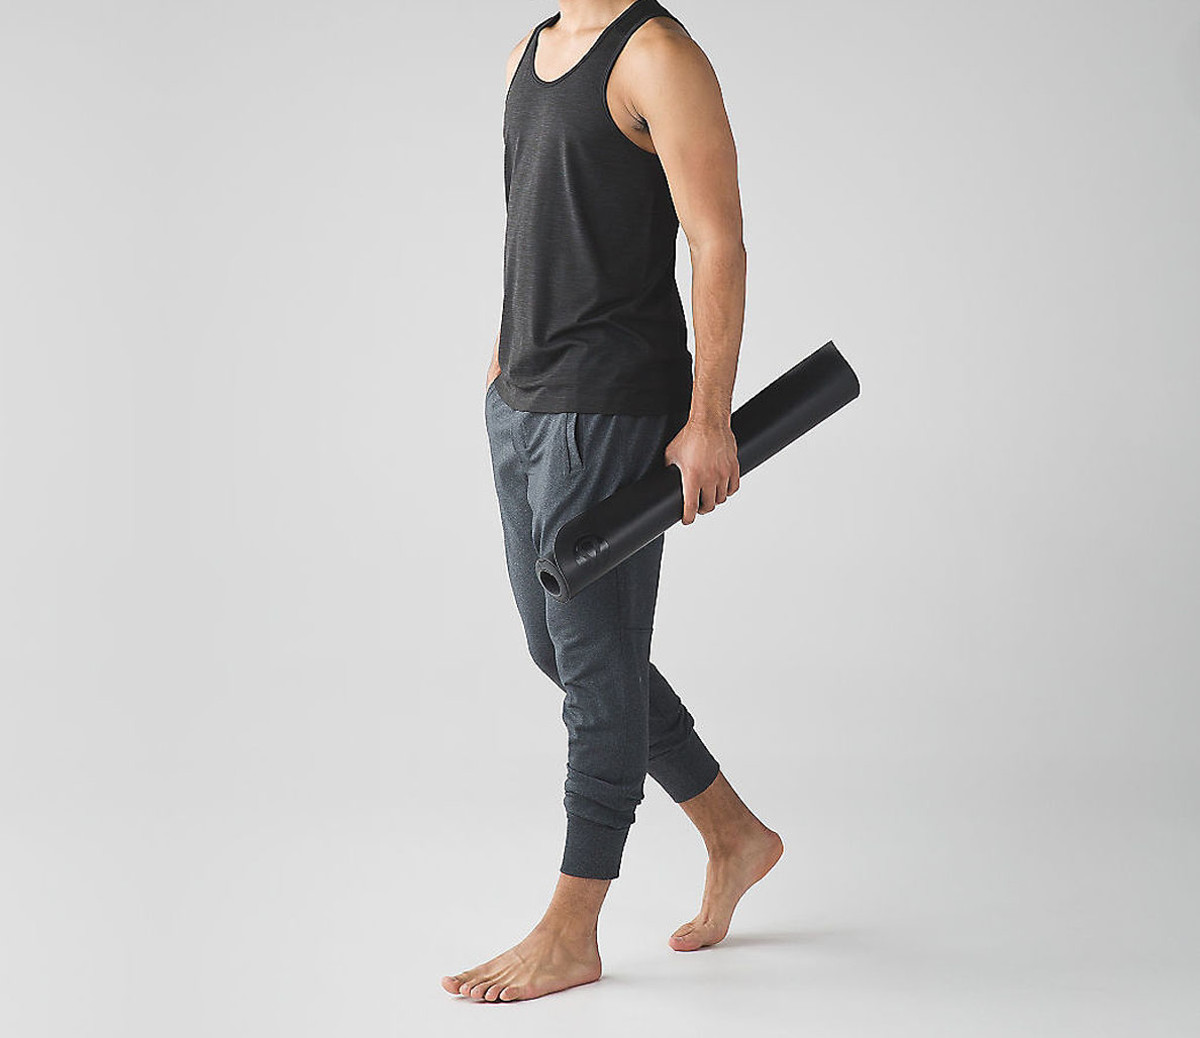 Men's Yoga Wear, men yoga shorts